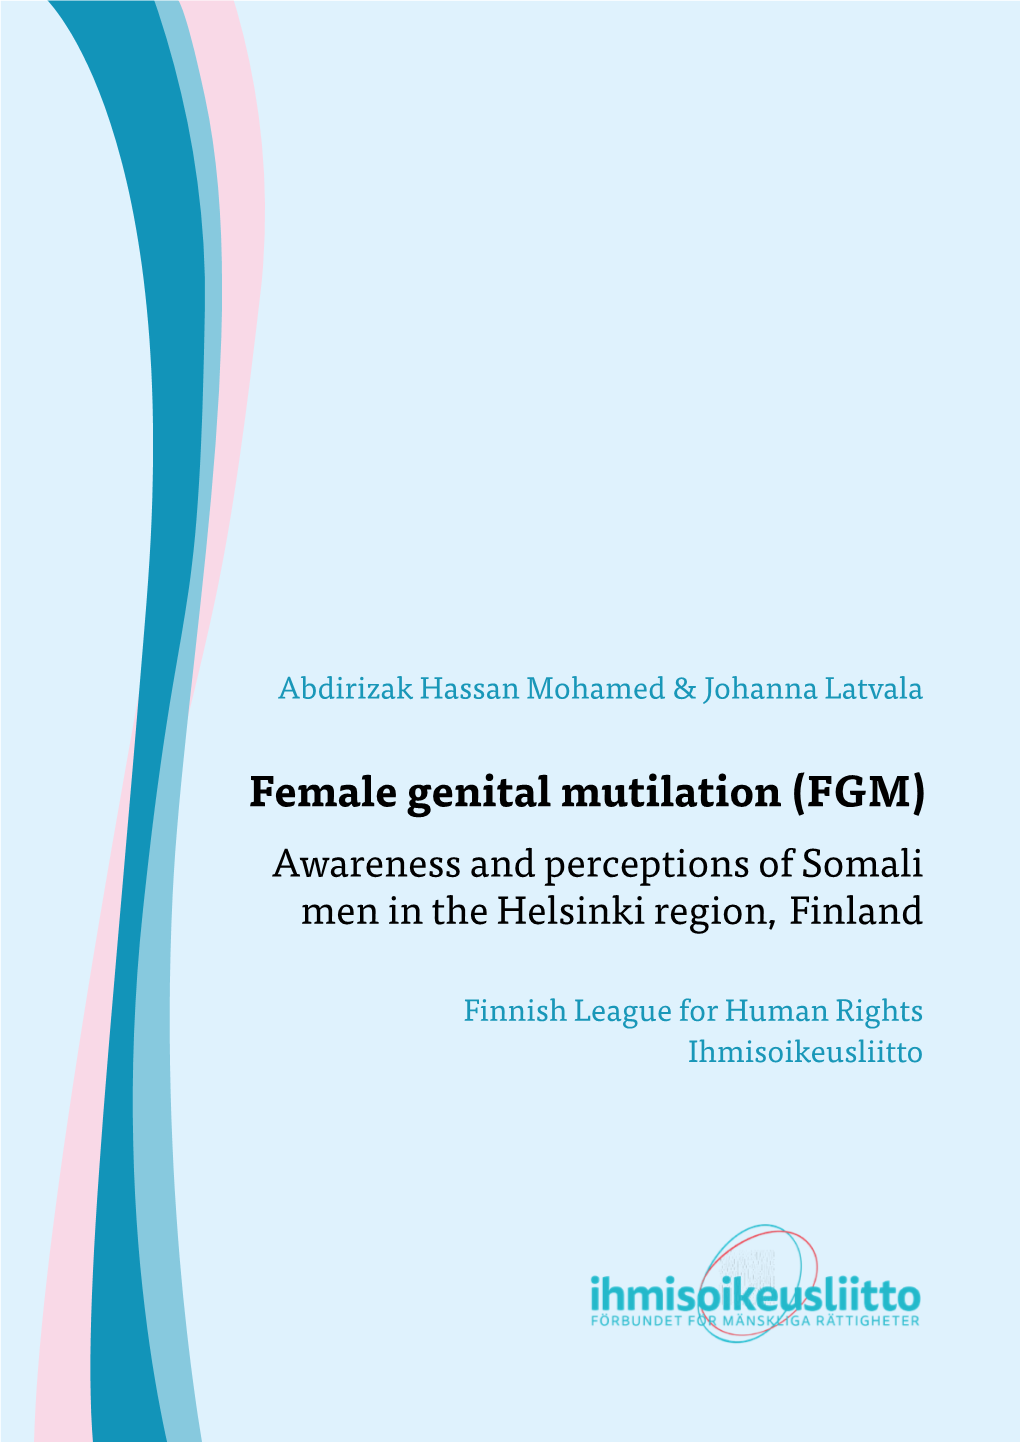 (FGM) Awareness and Perceptions of Somali Men in the Helsinki Region, Finland